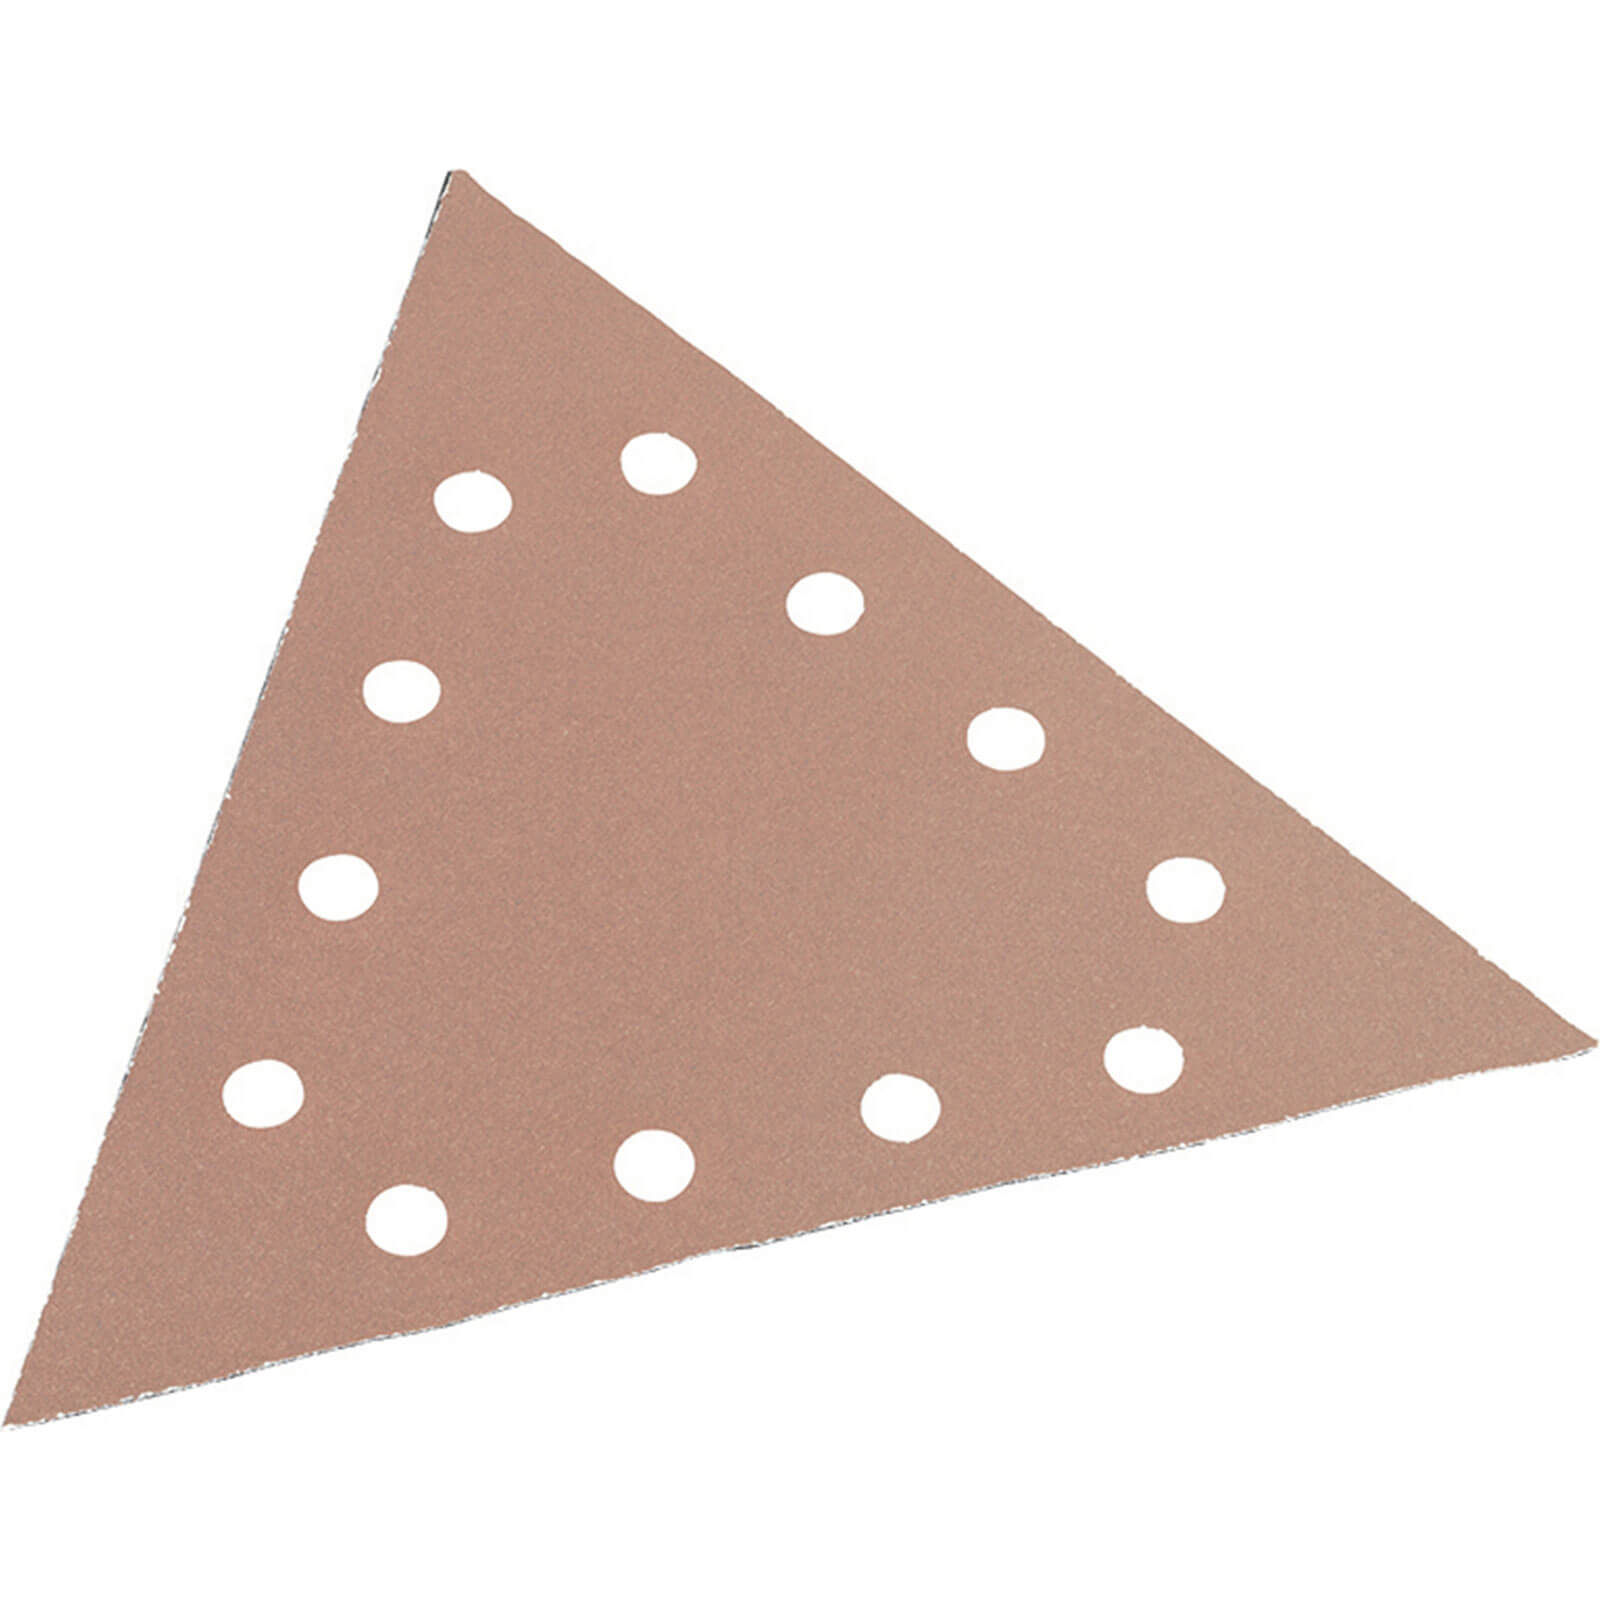 Image of Flex Triangular Sanding Sheets for WSE 7 and WST 700 Giraffe Sanders 40g Pack of 25